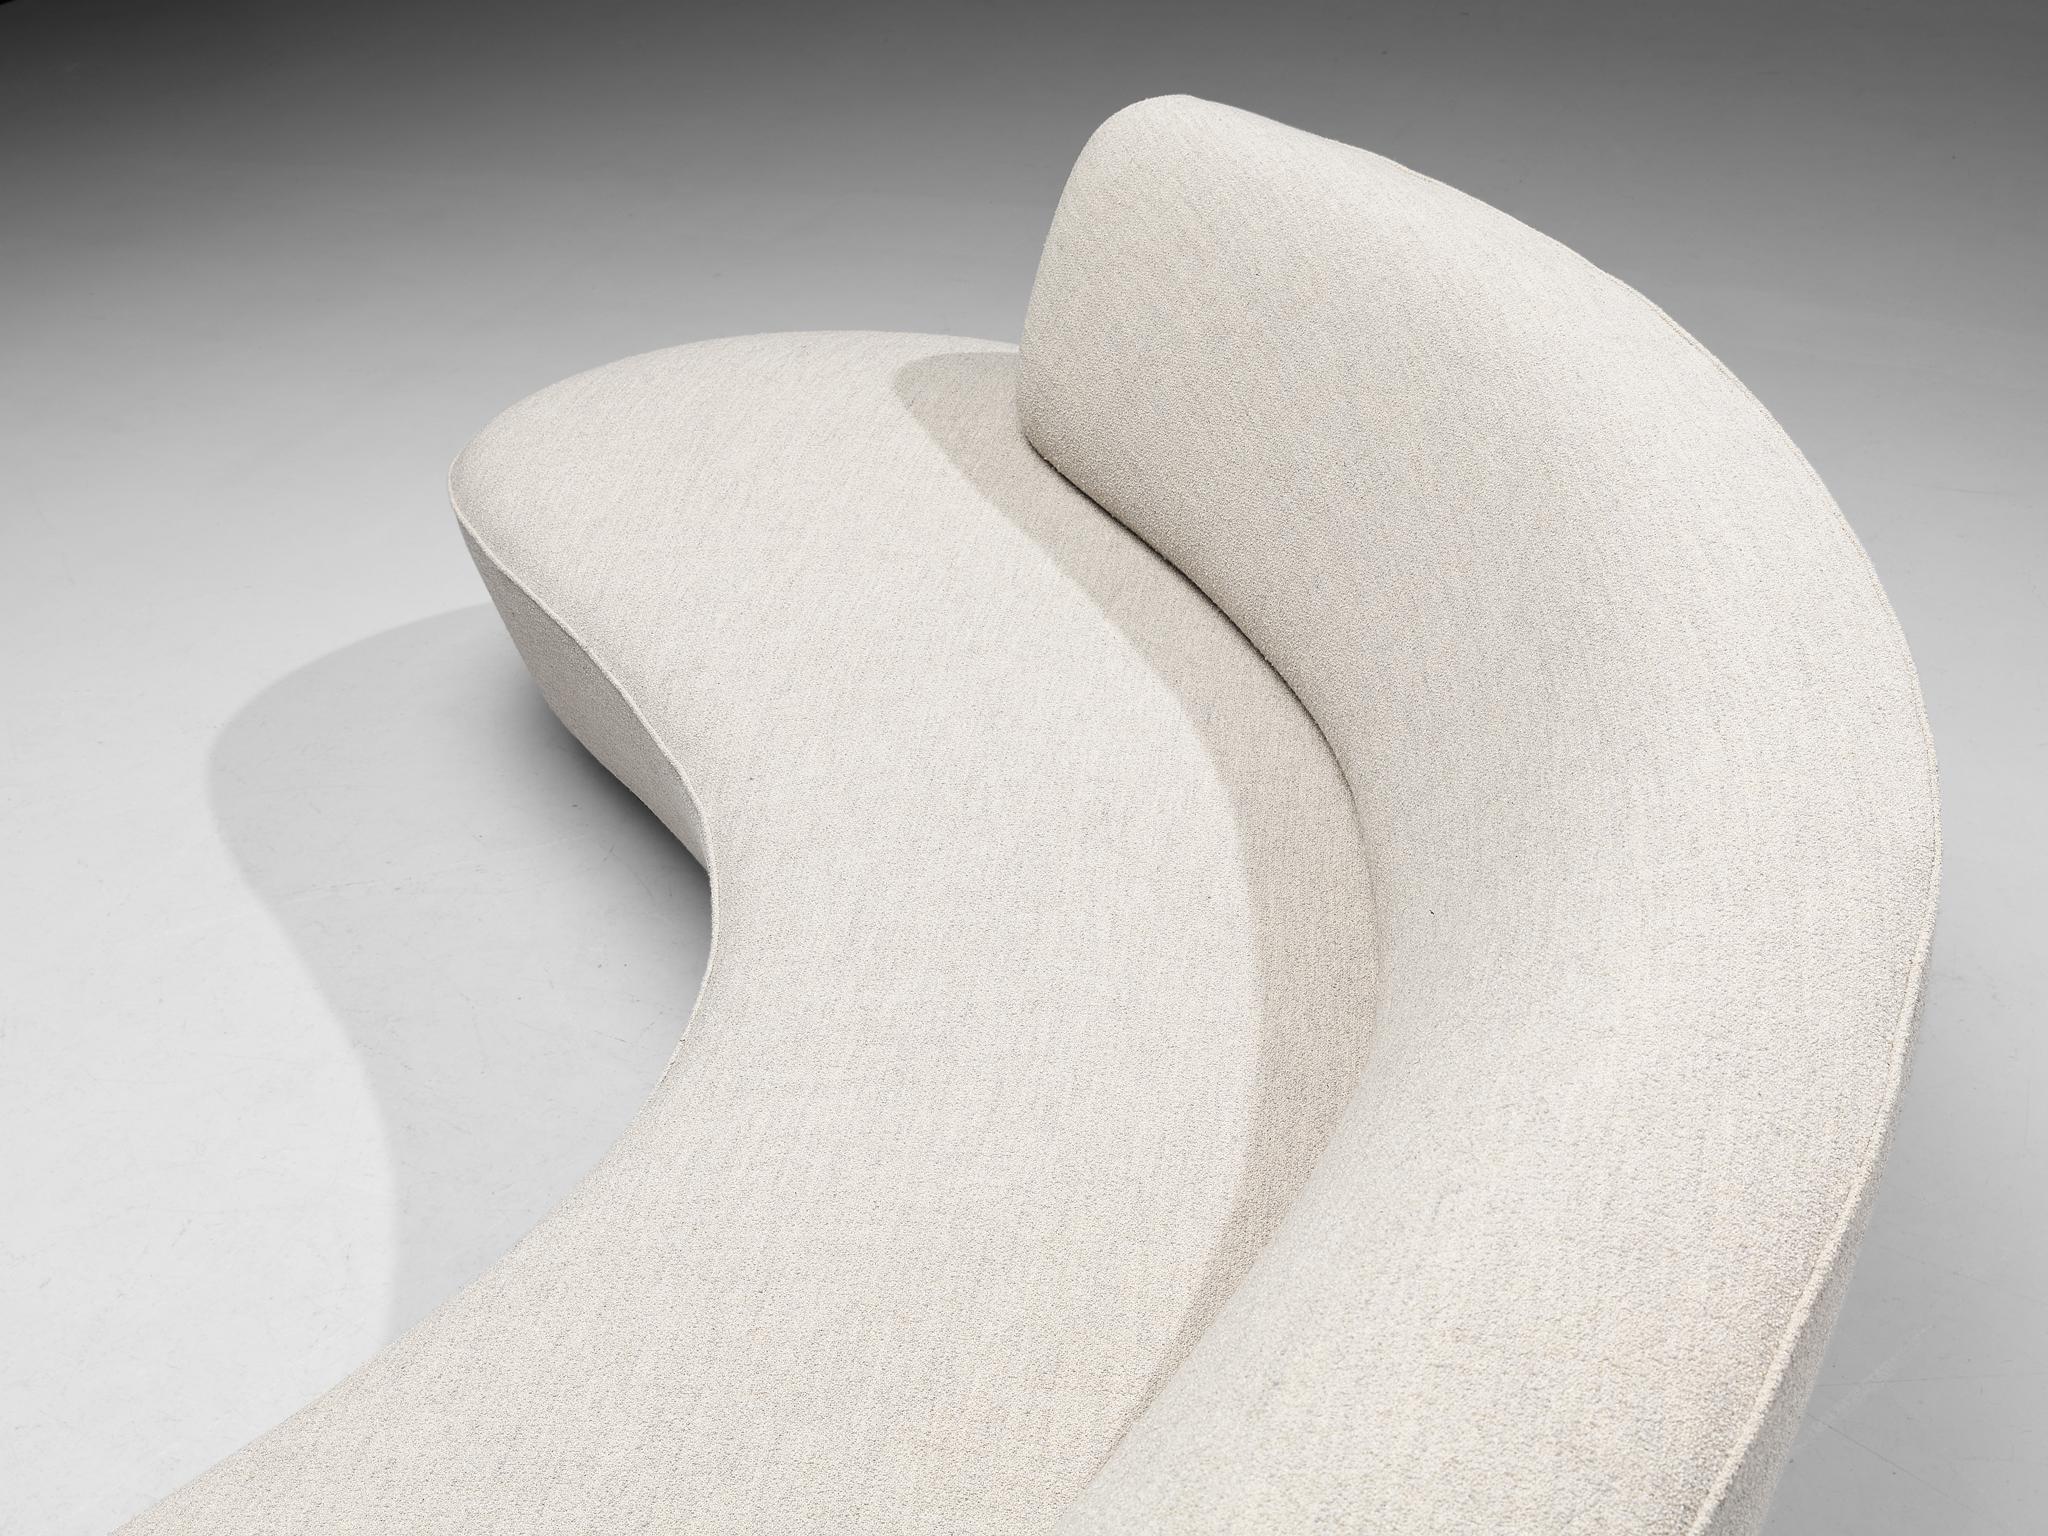 Iconic Vladimir Kagan ‘Serpentine’ Sofa in White Upholstery 2